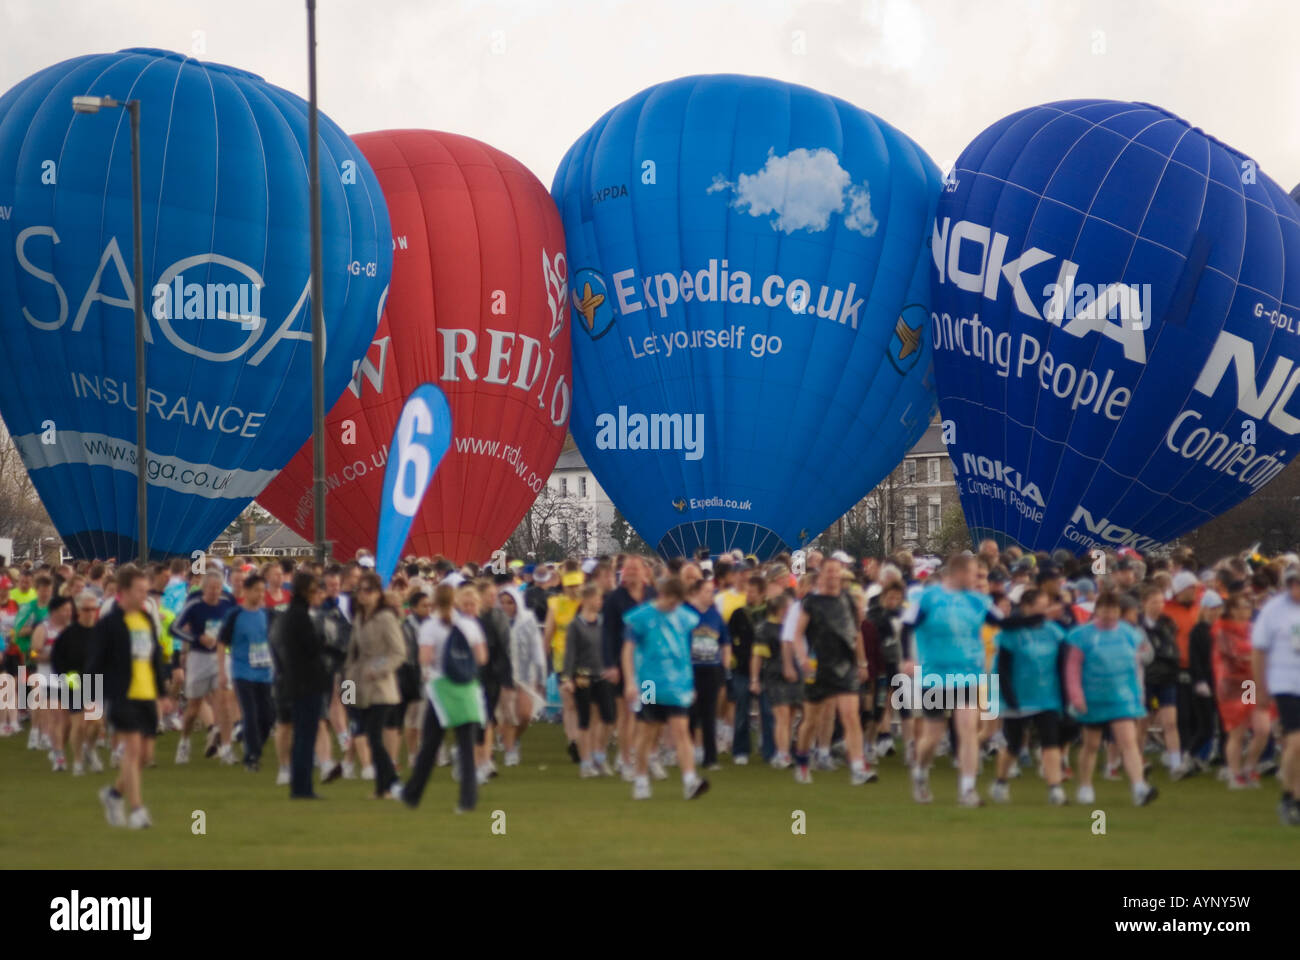 Hot Air Balloon ballons parrainage promotion Assurance Saga Redrow Expedia co uk Blackheath South London SE21 Londres UK London Banque D'Images